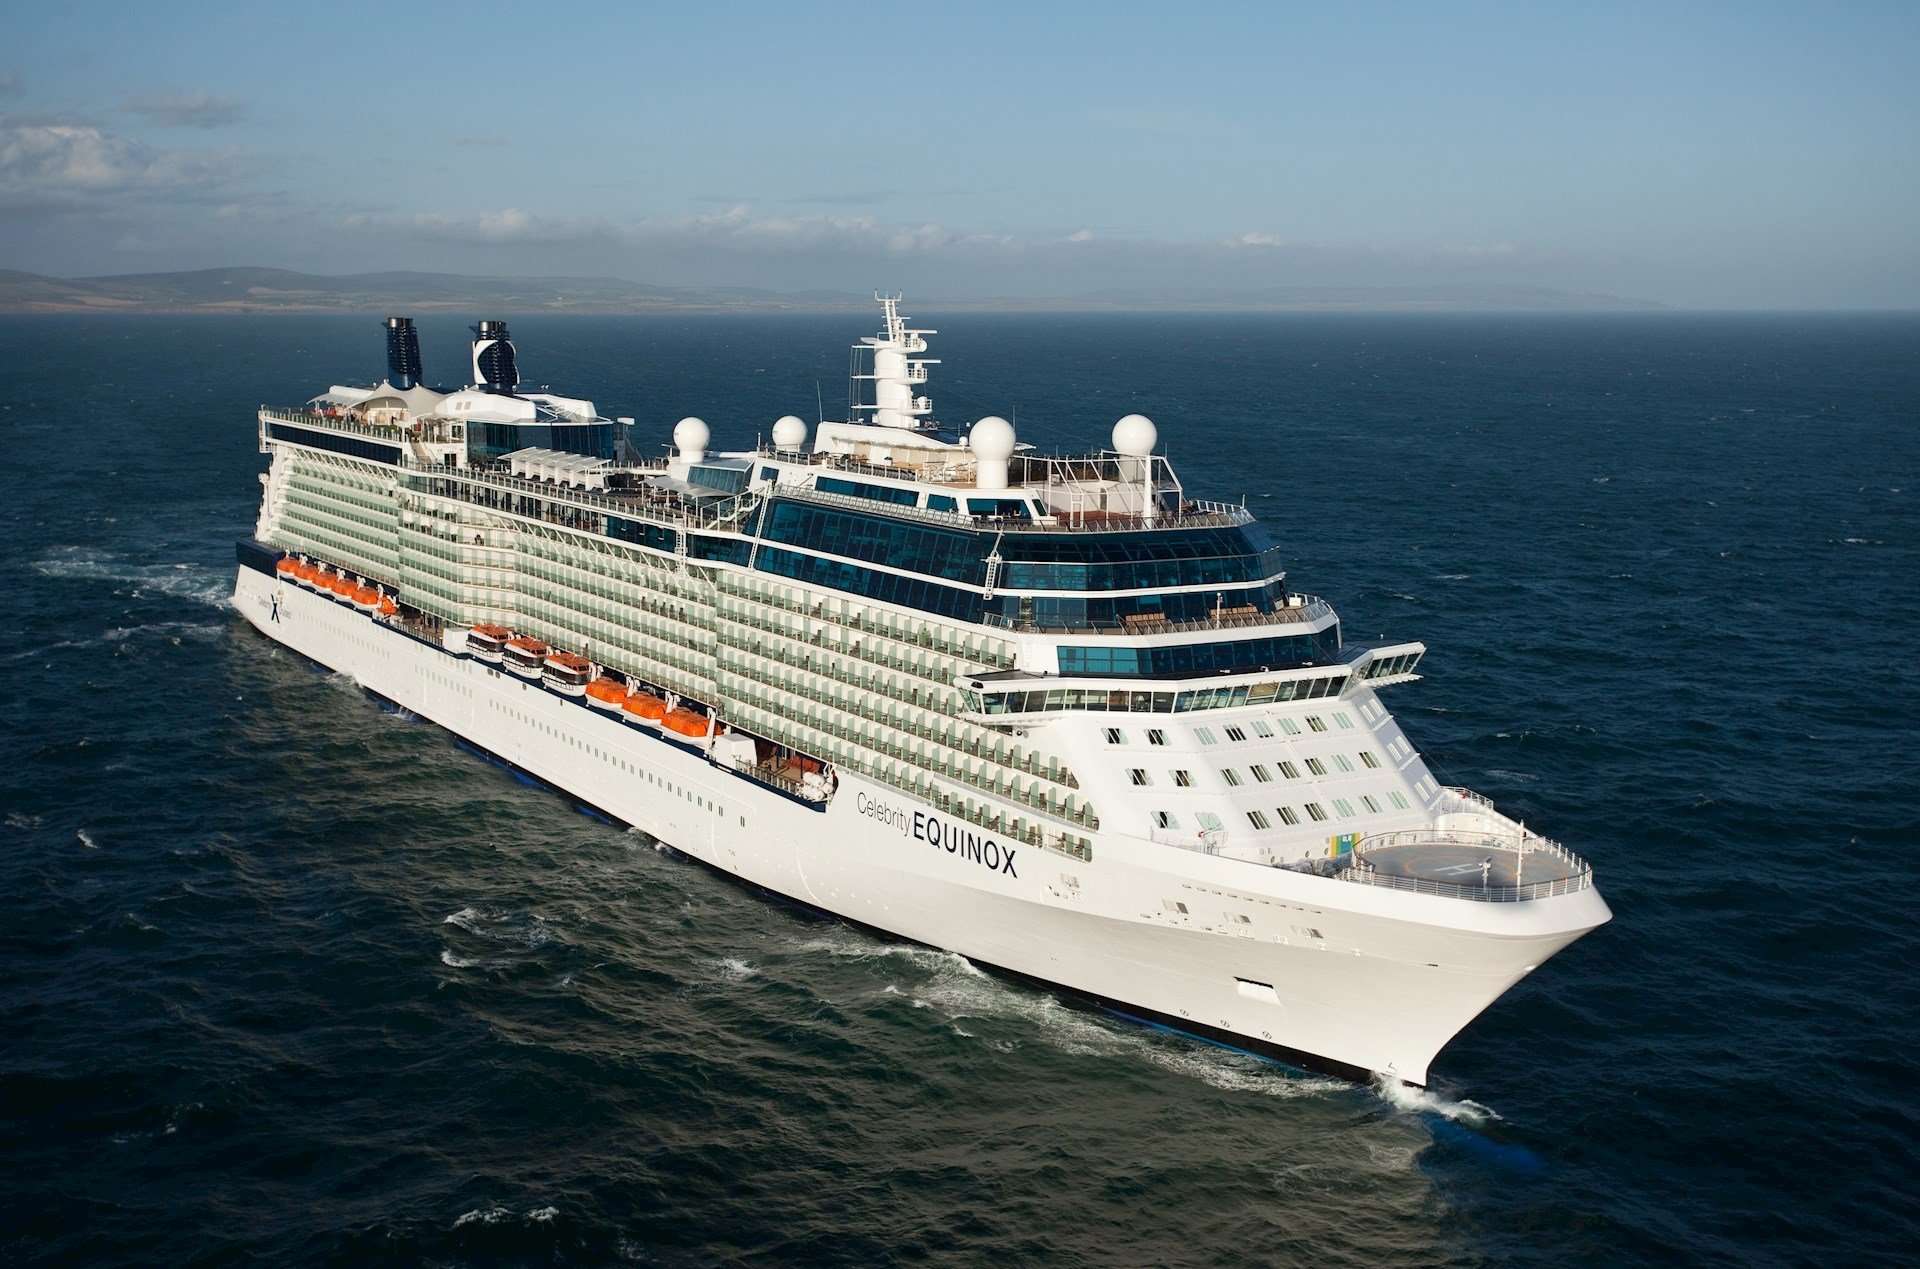 Celebrity Equinox Cruise Ship 2020 / 2021